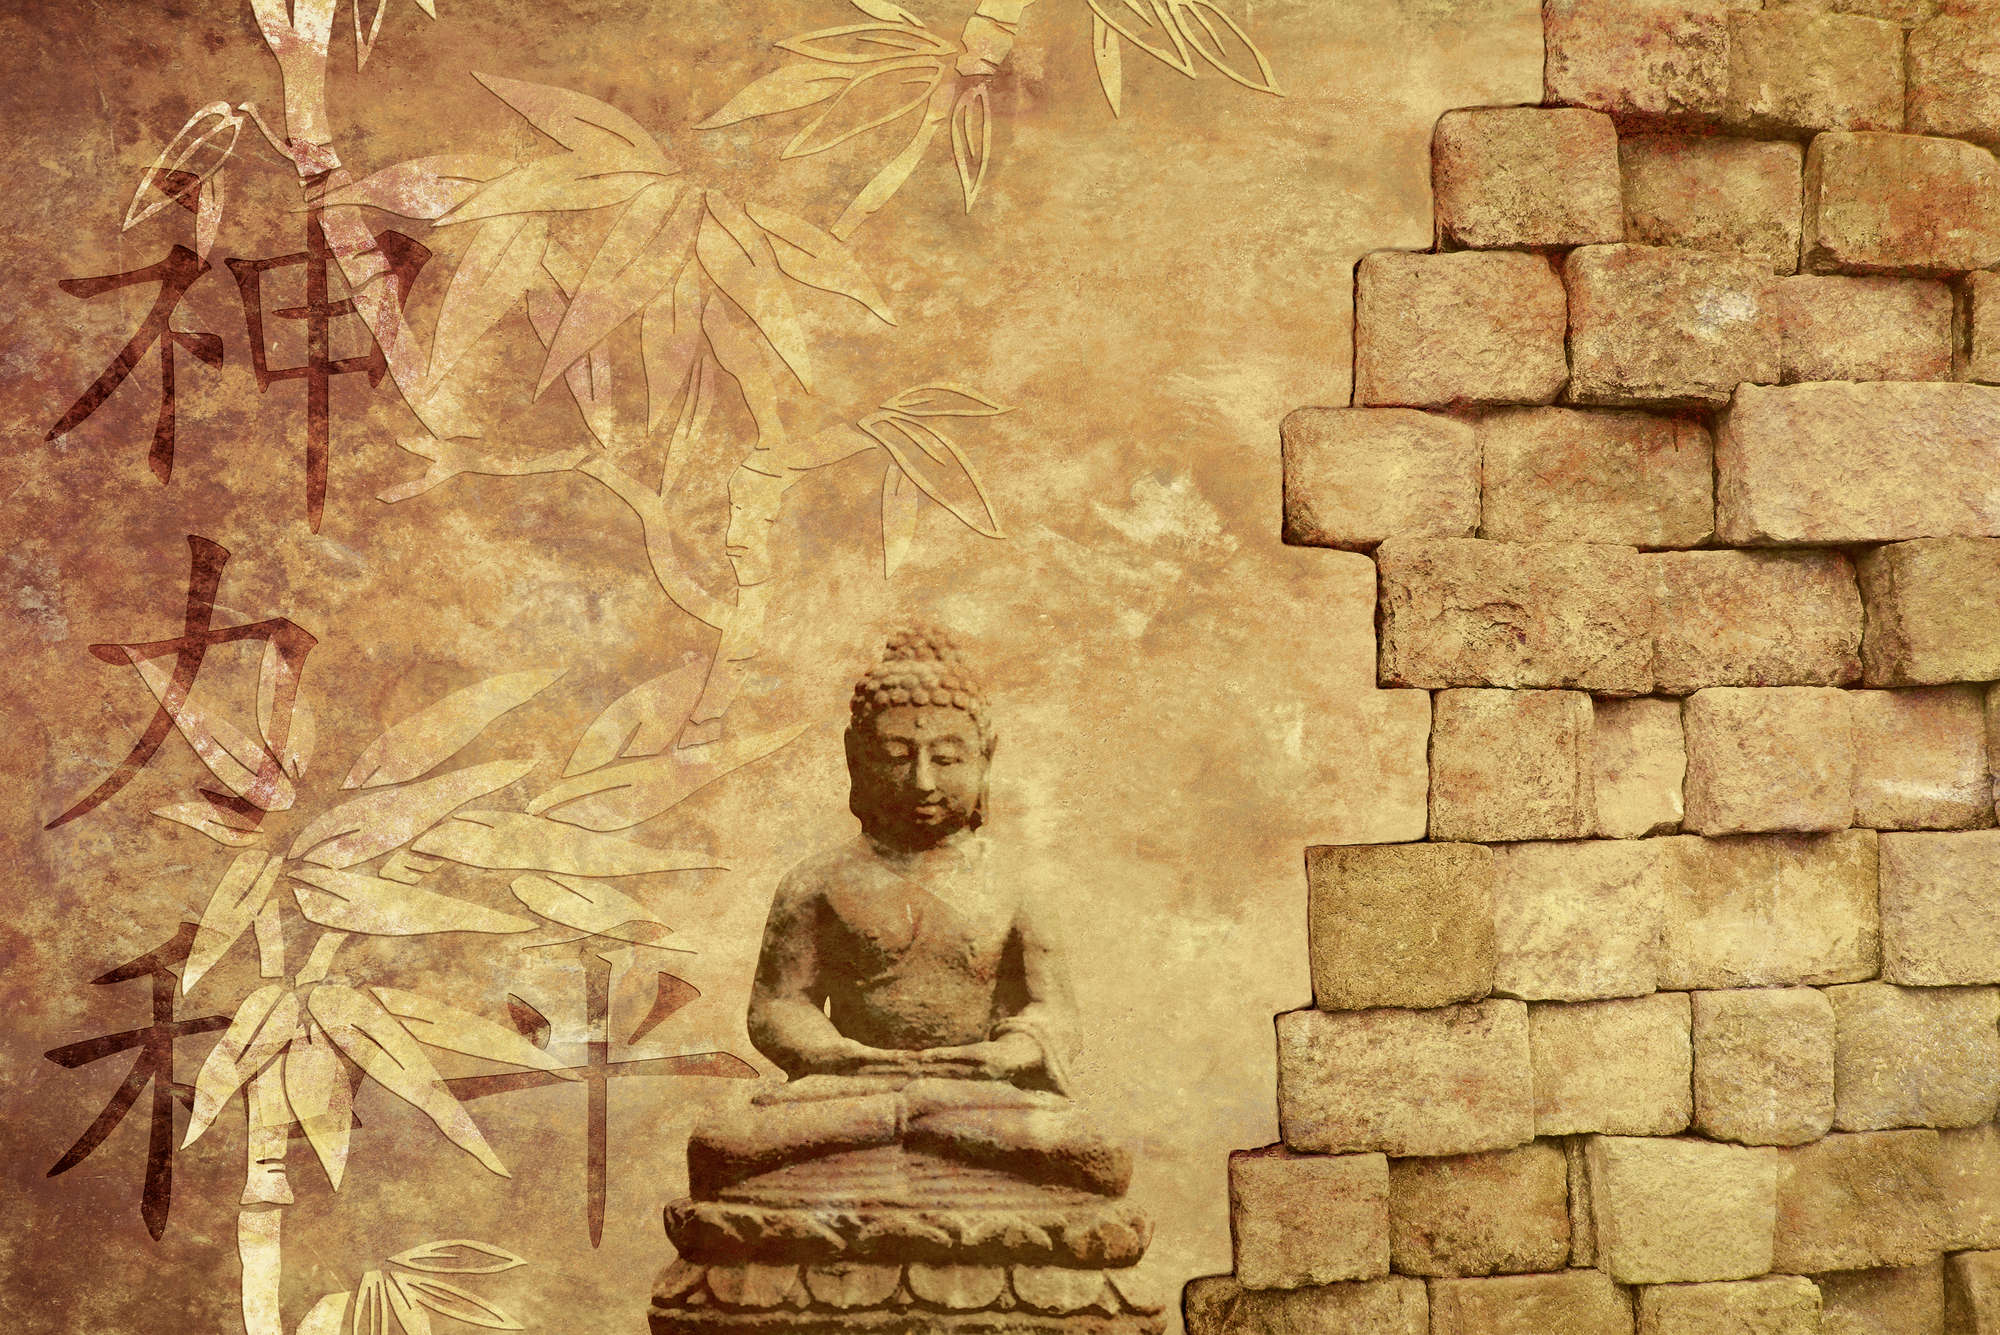             Photo wallpaper with Buddha figure - Premium smooth fleece
        